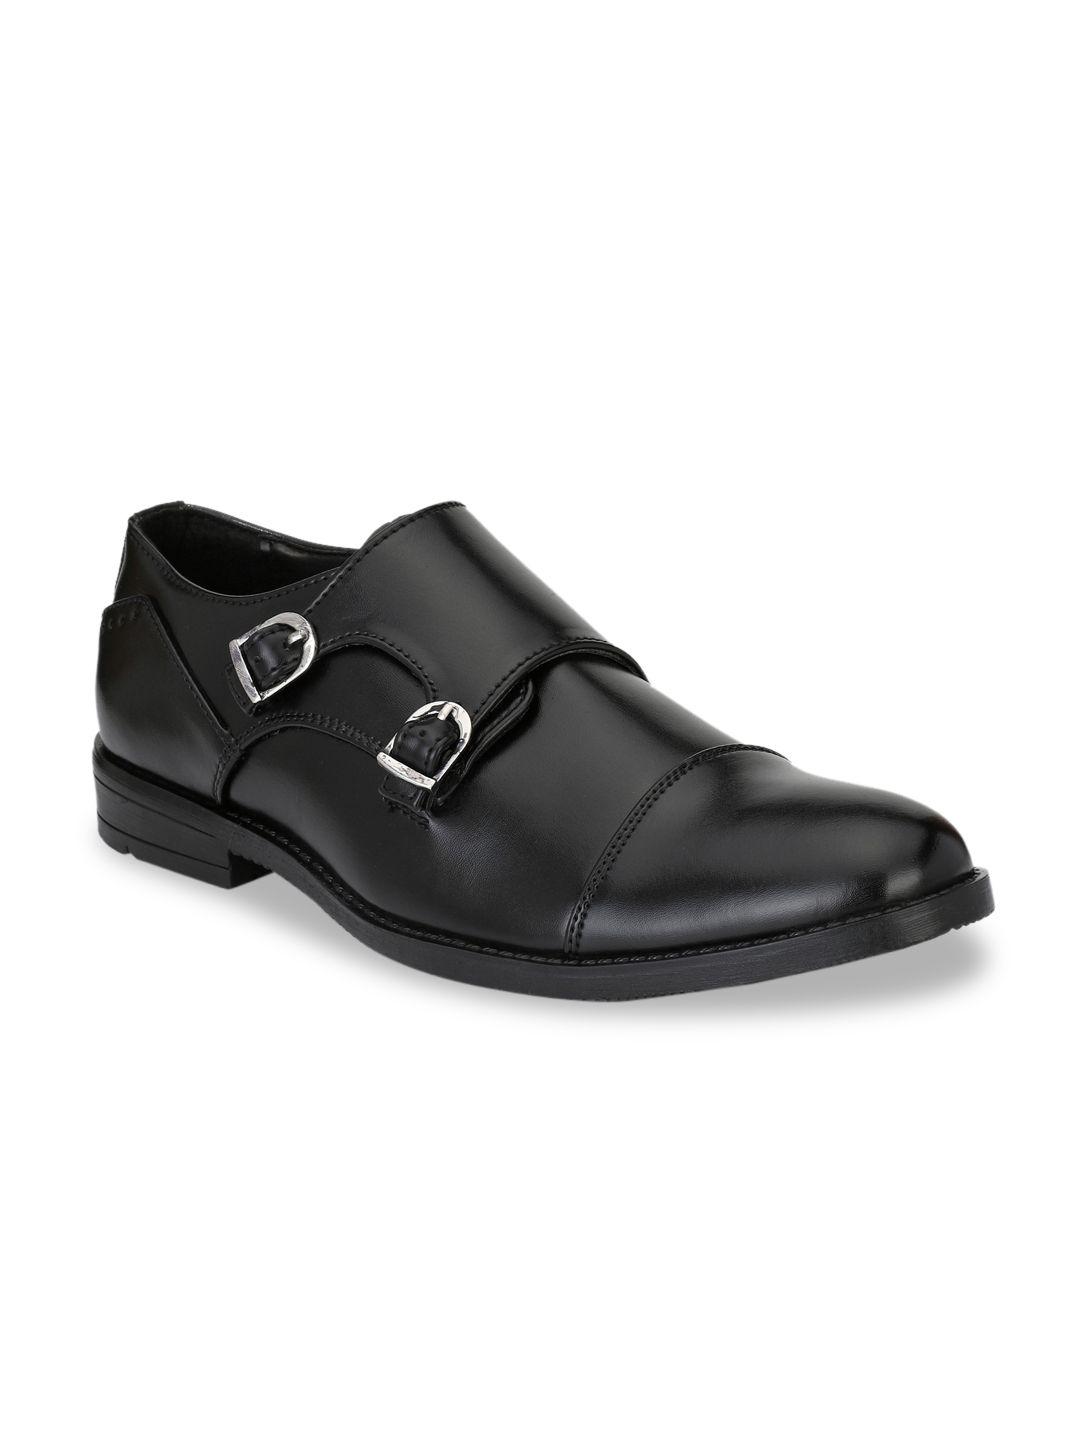 hirels men black solid pu formal monk shoes